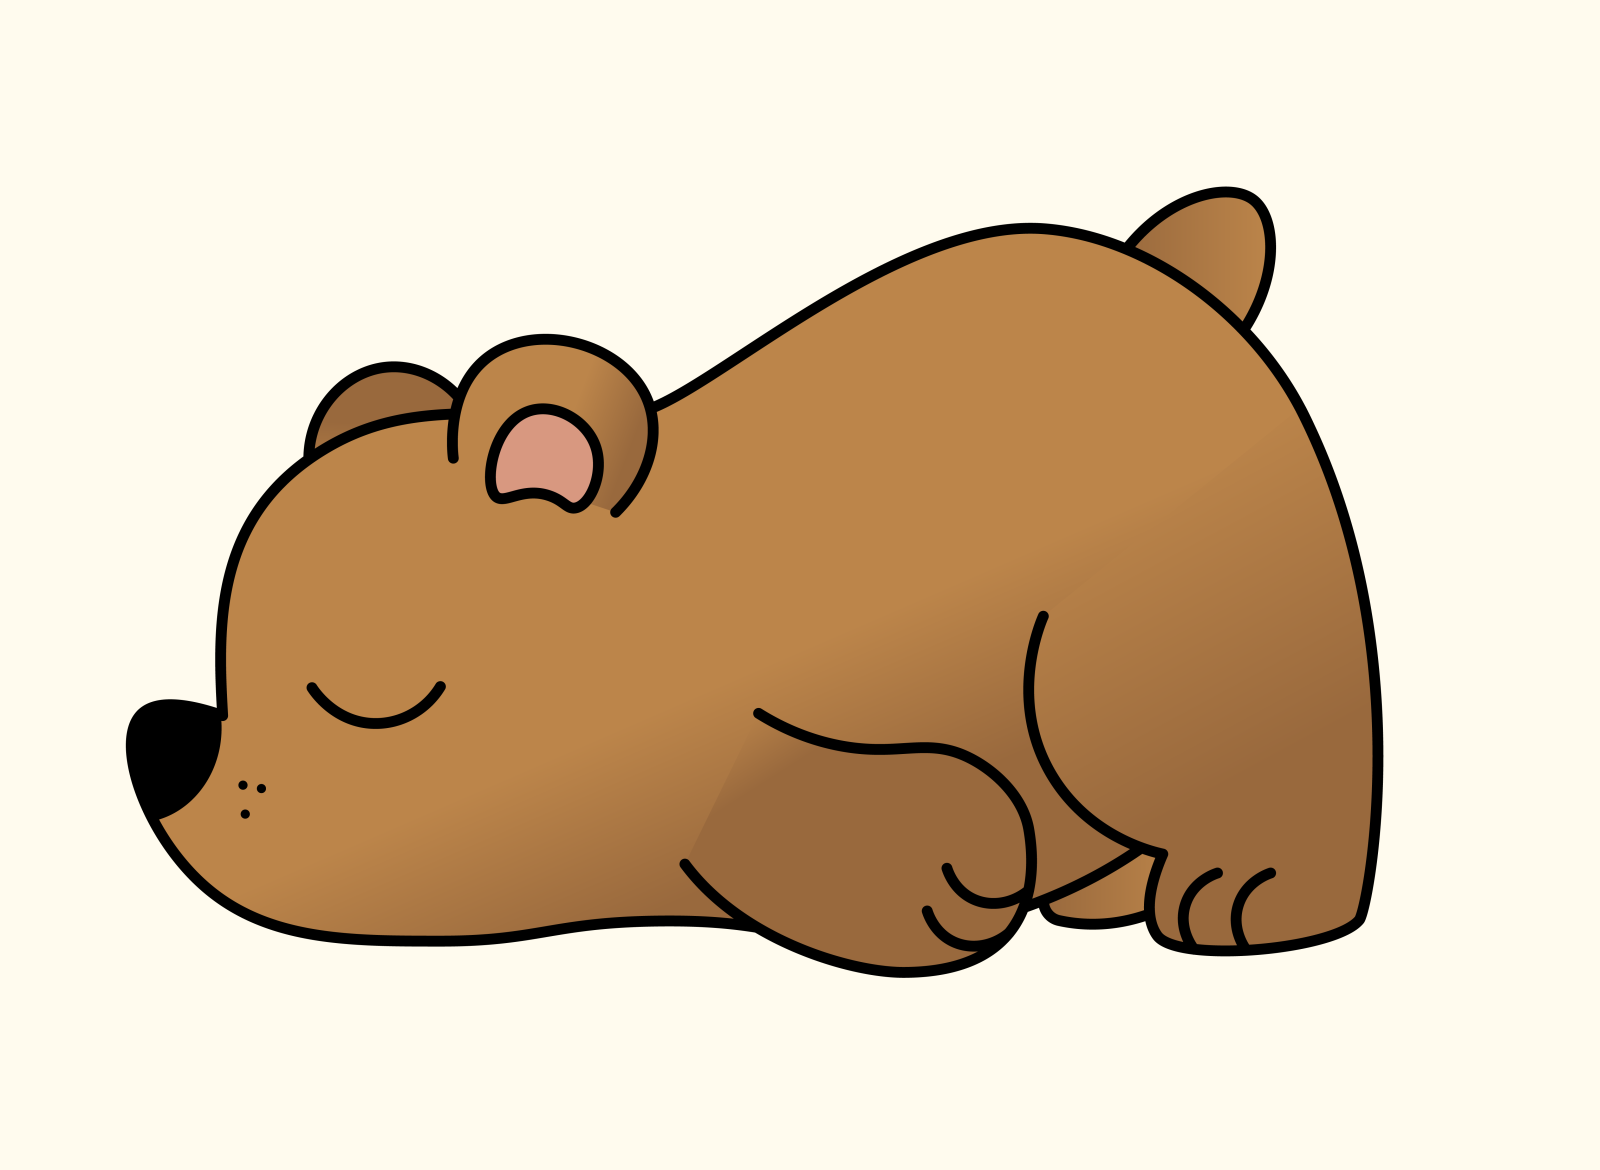 Tired bear by anastasia leckermaul on